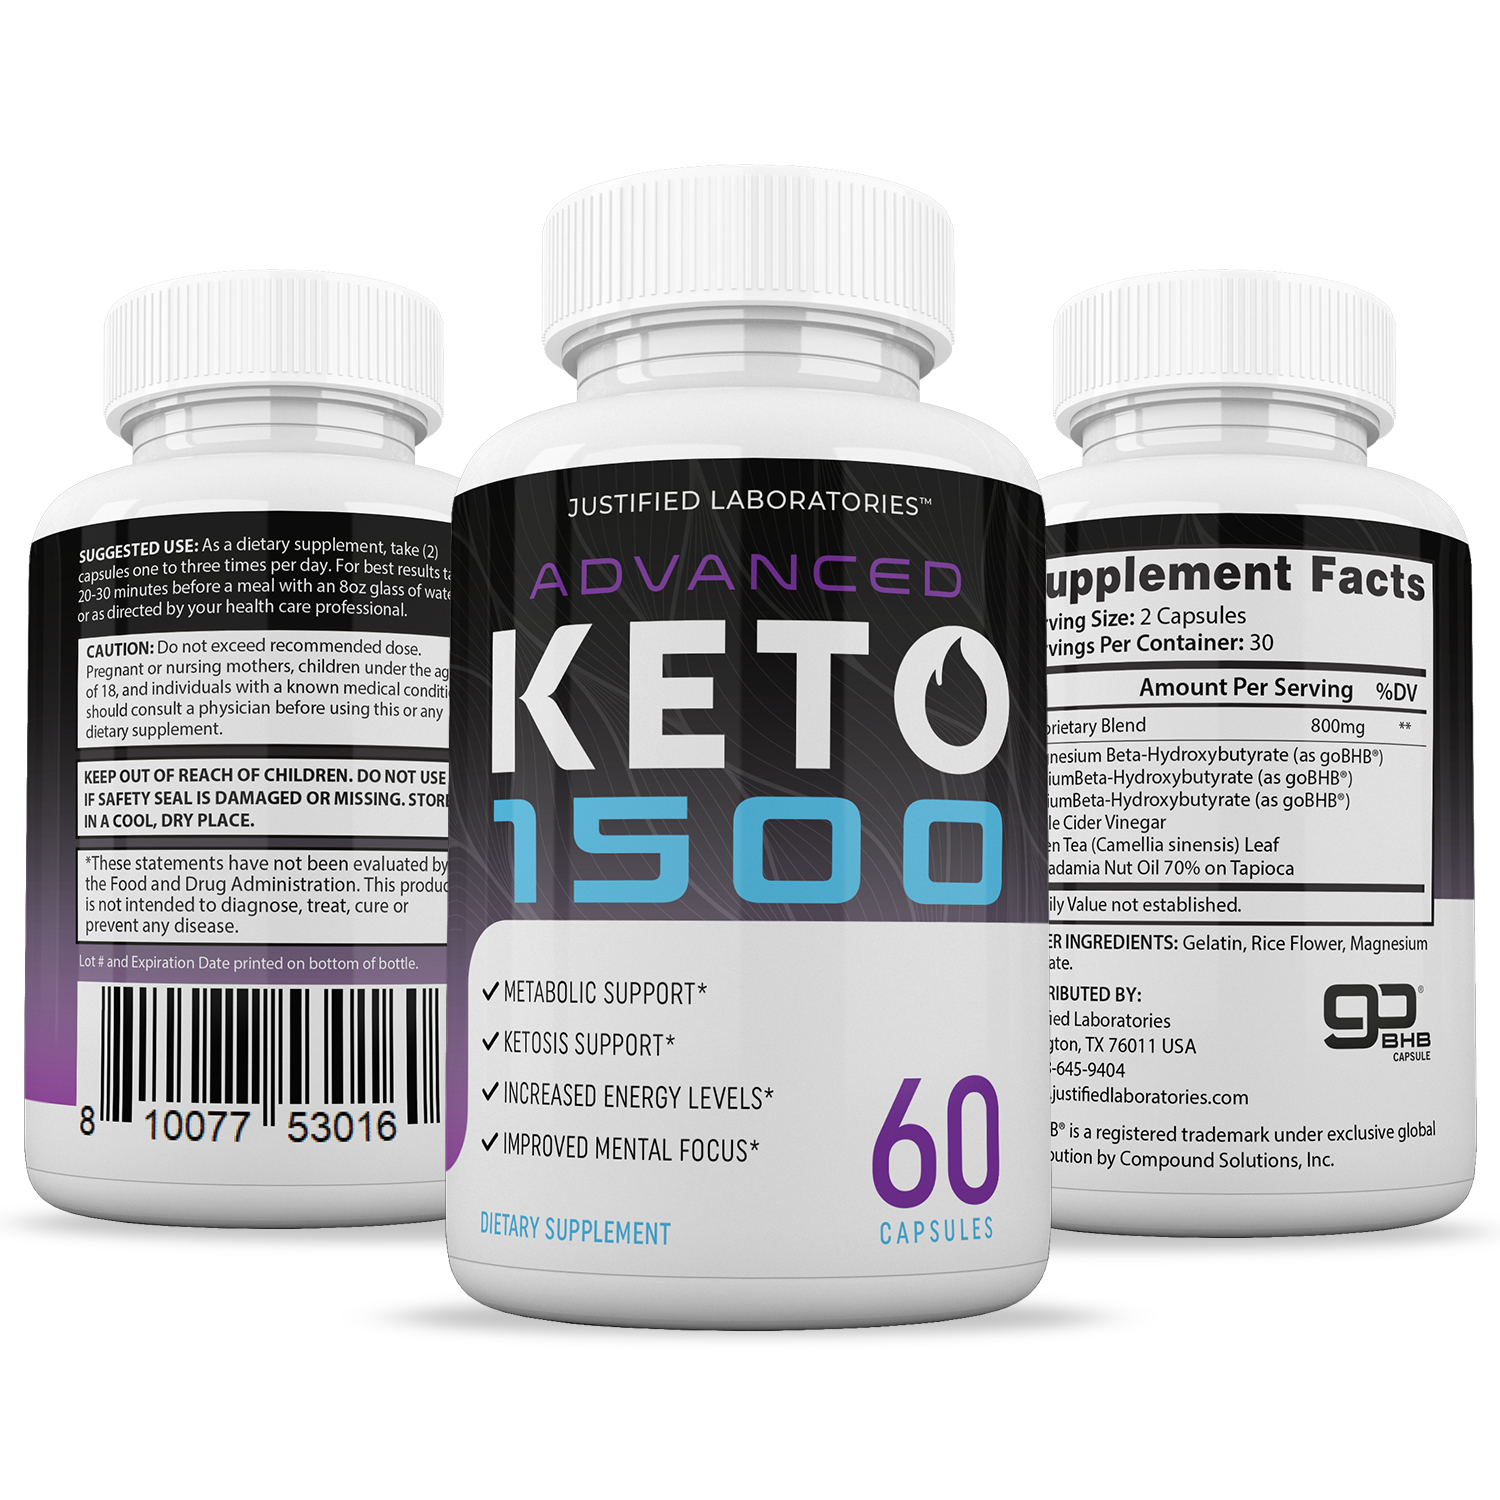 Advanced Keto 1500 Pills Includes Apple Cider Vinegar goBHB Exogenous Ketones Advanced Ketogenic Supplement Ketosis Support for Men Women 60 Capsule - image 5 of 5